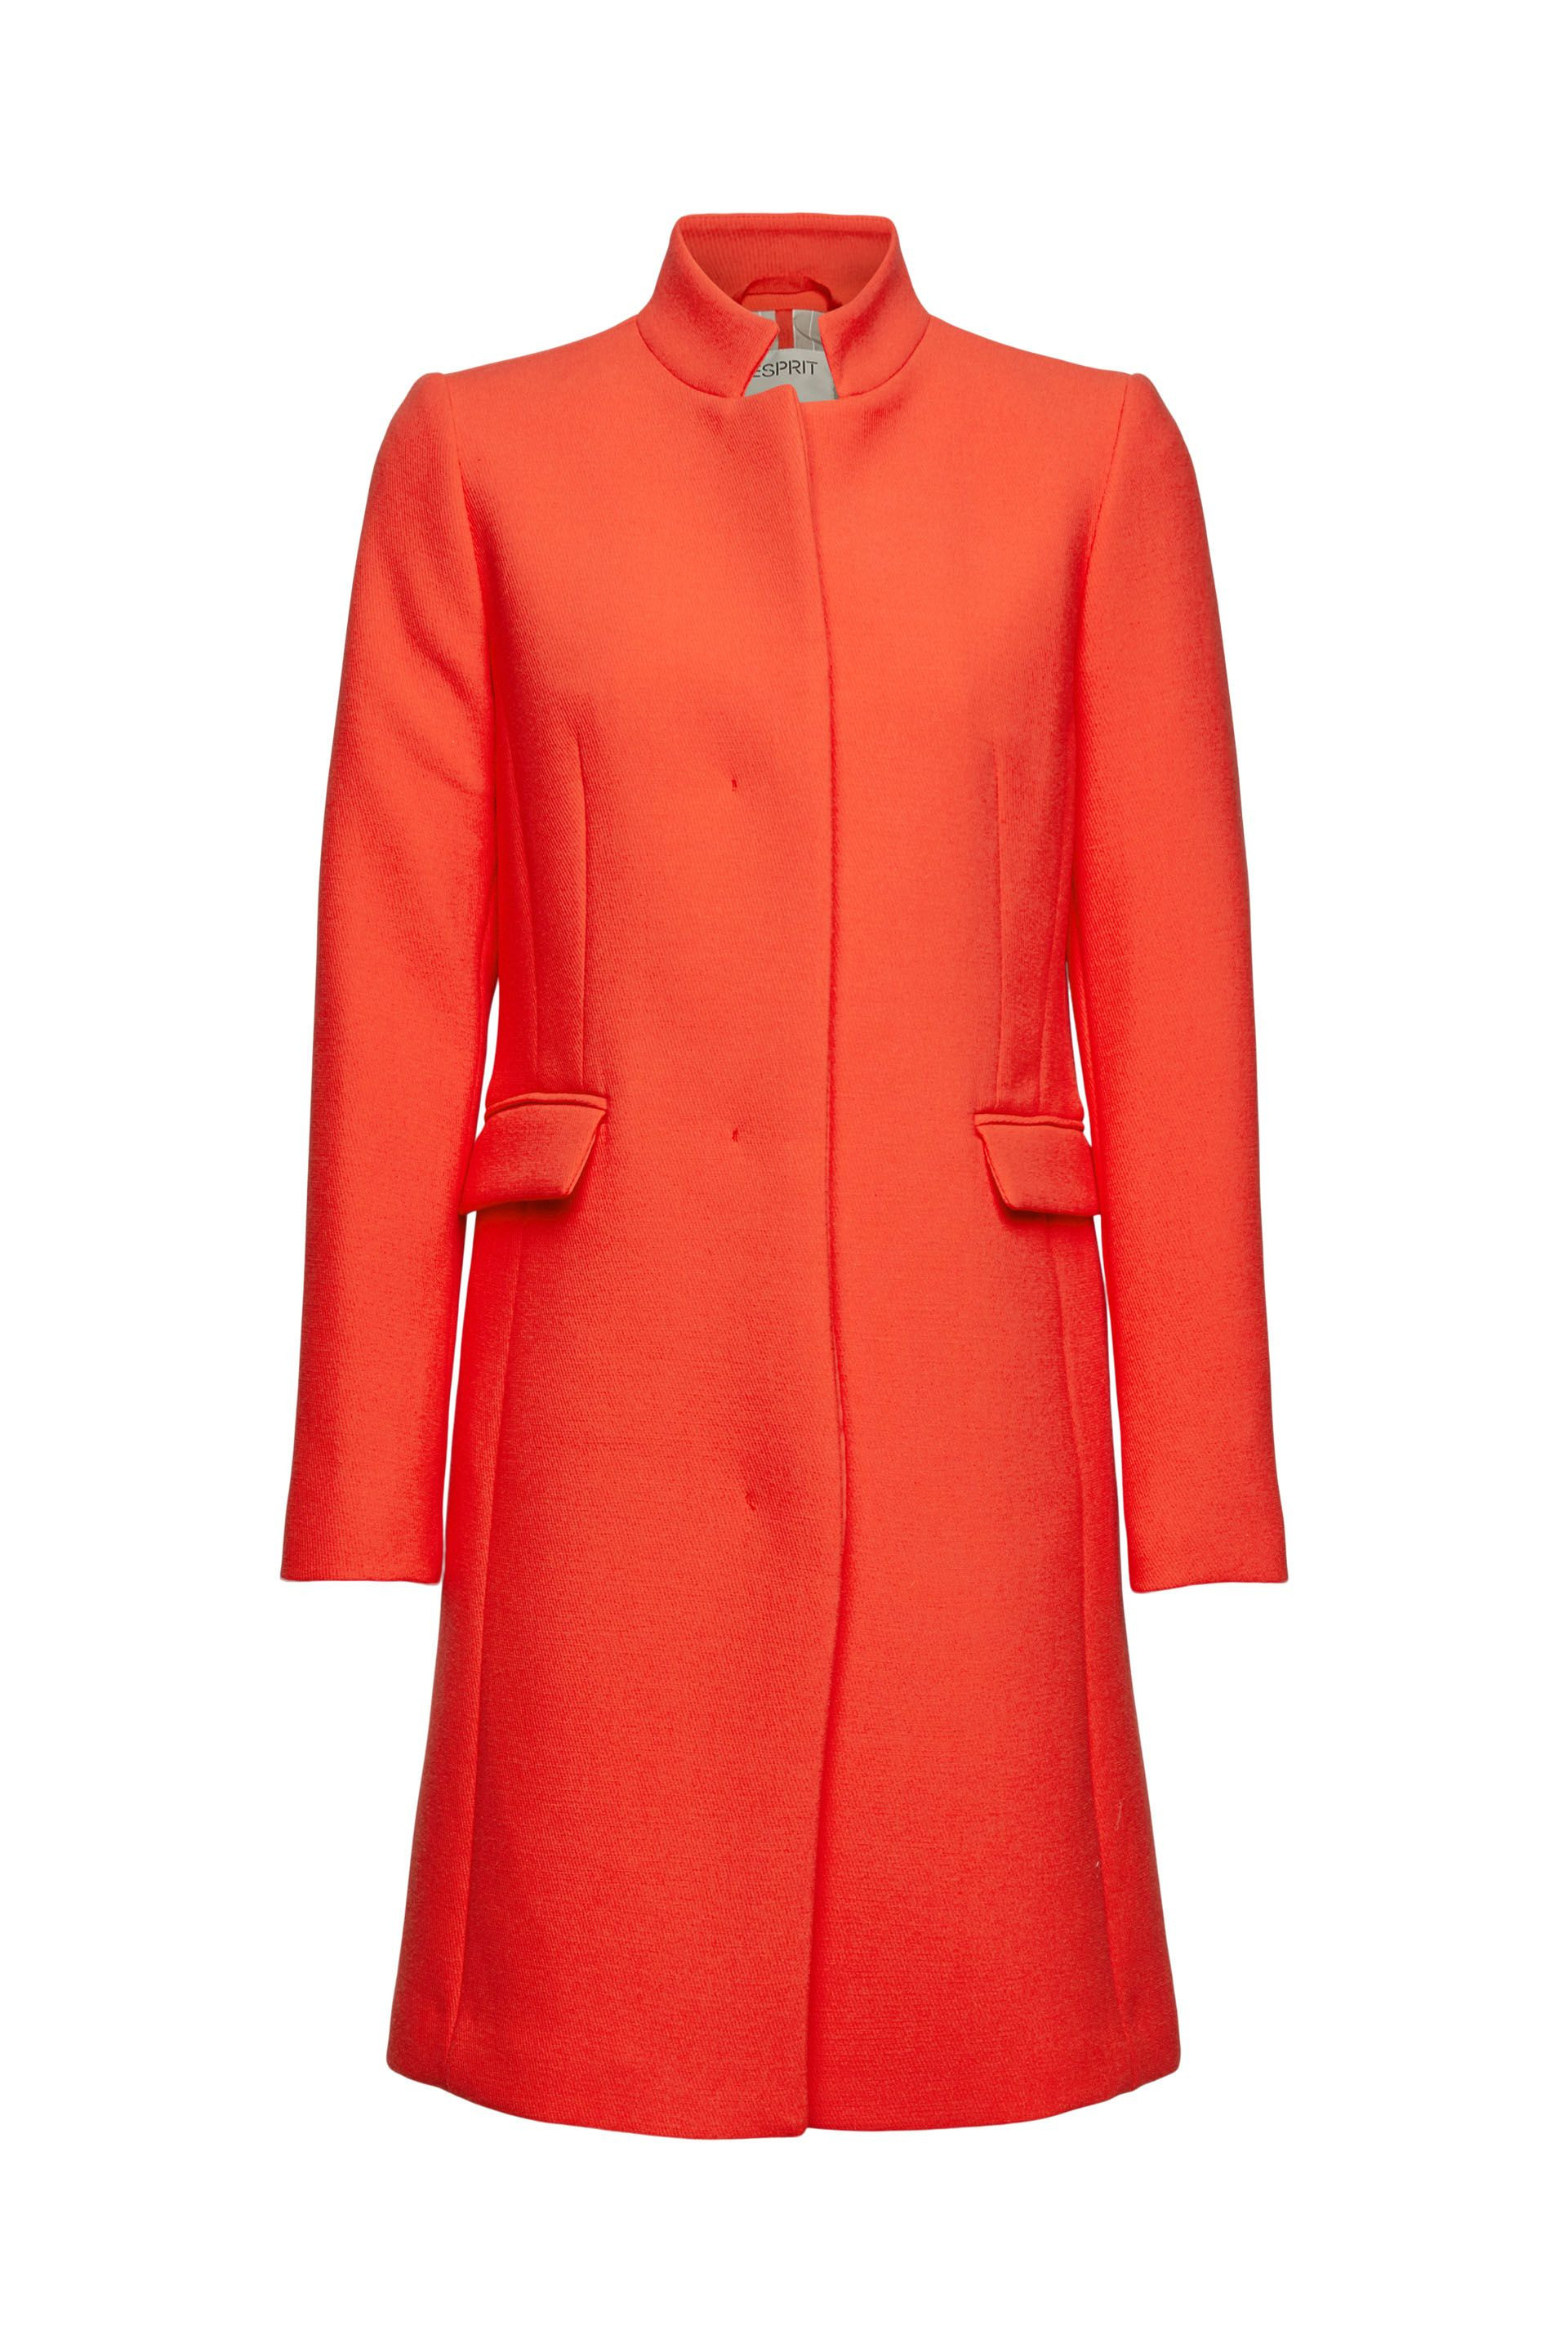 Fitted coat, Orange, large image number 0